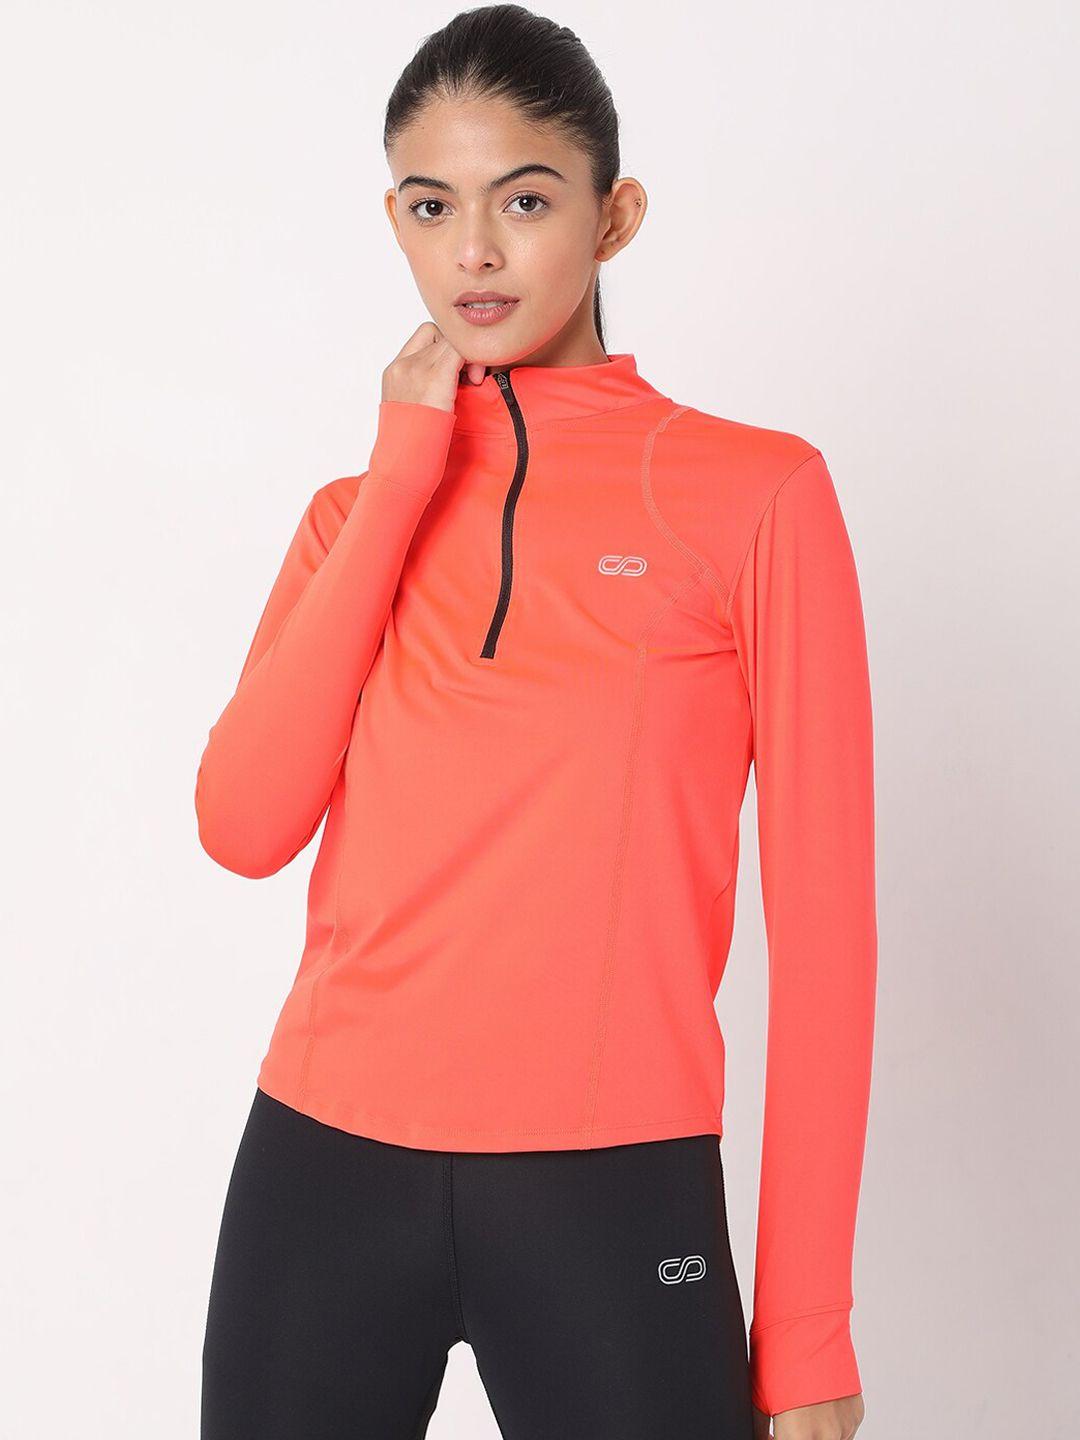 silvertraq-women-coral-lightweight-training-or-gym-sporty-jacket